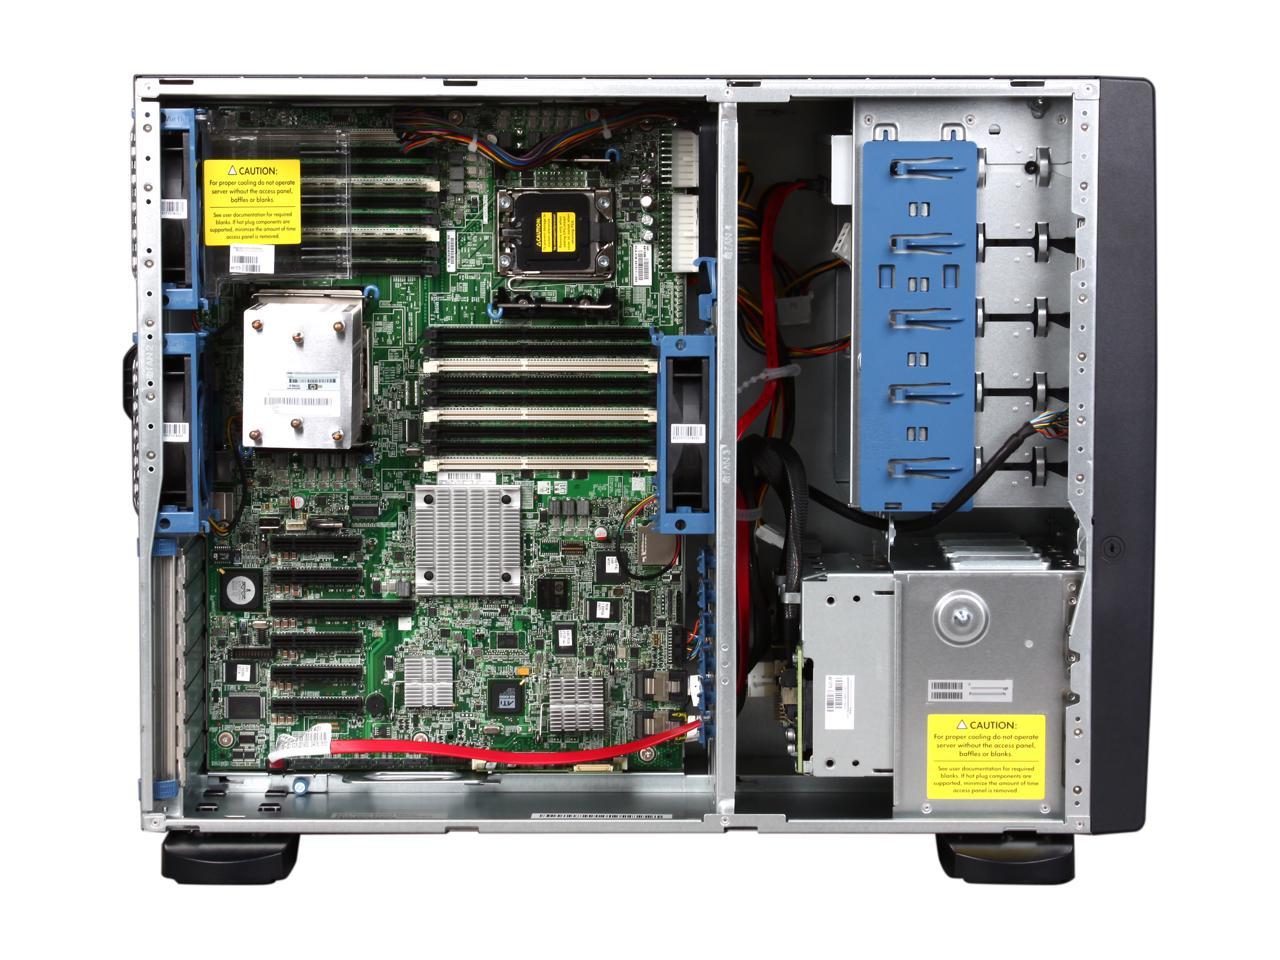 HP ProLiant ML350 G6 Tower Server System Intel Xeon E5620 2.40GHz 4C/8T